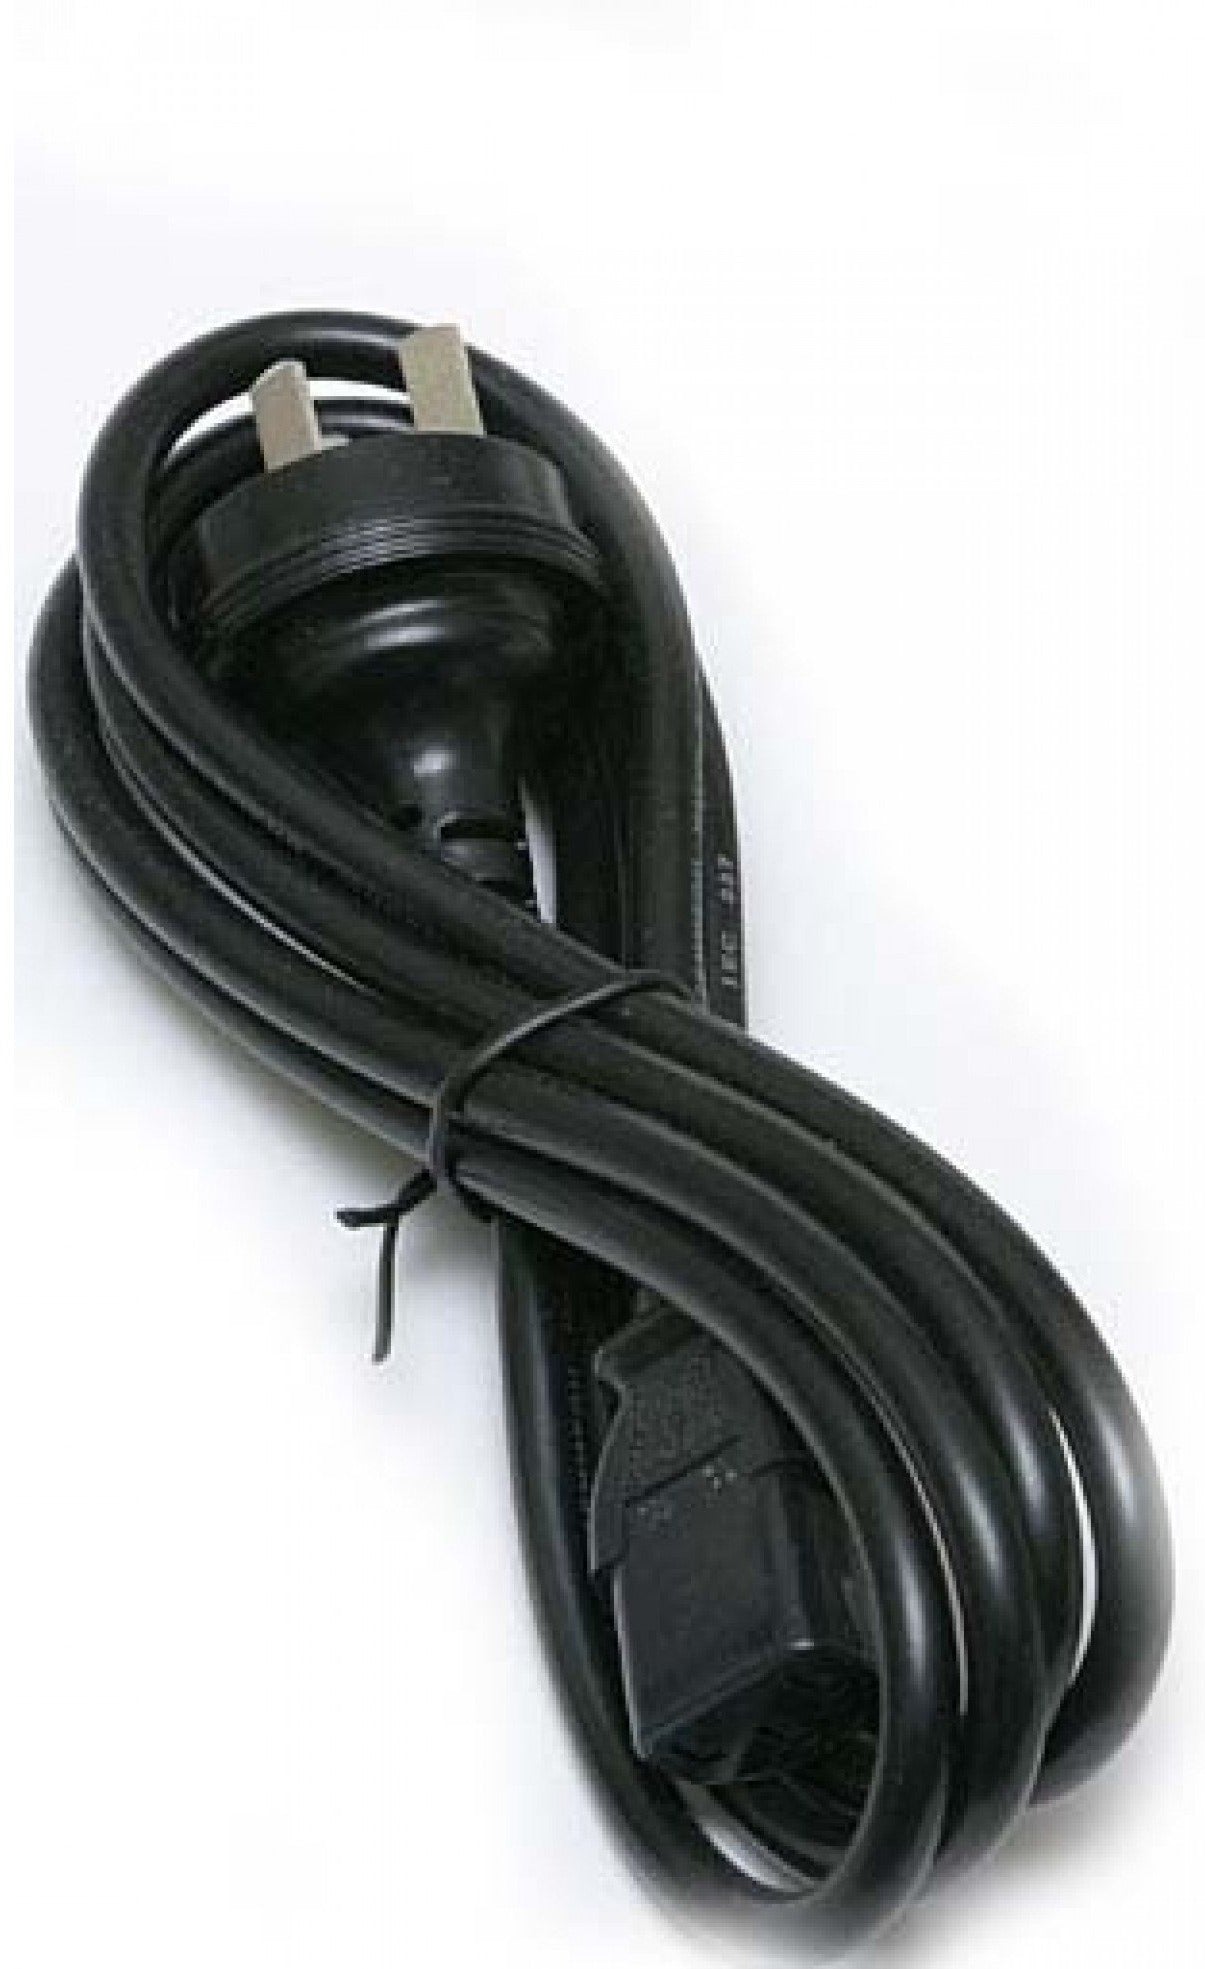 Jug Lead - IEC Power Cable